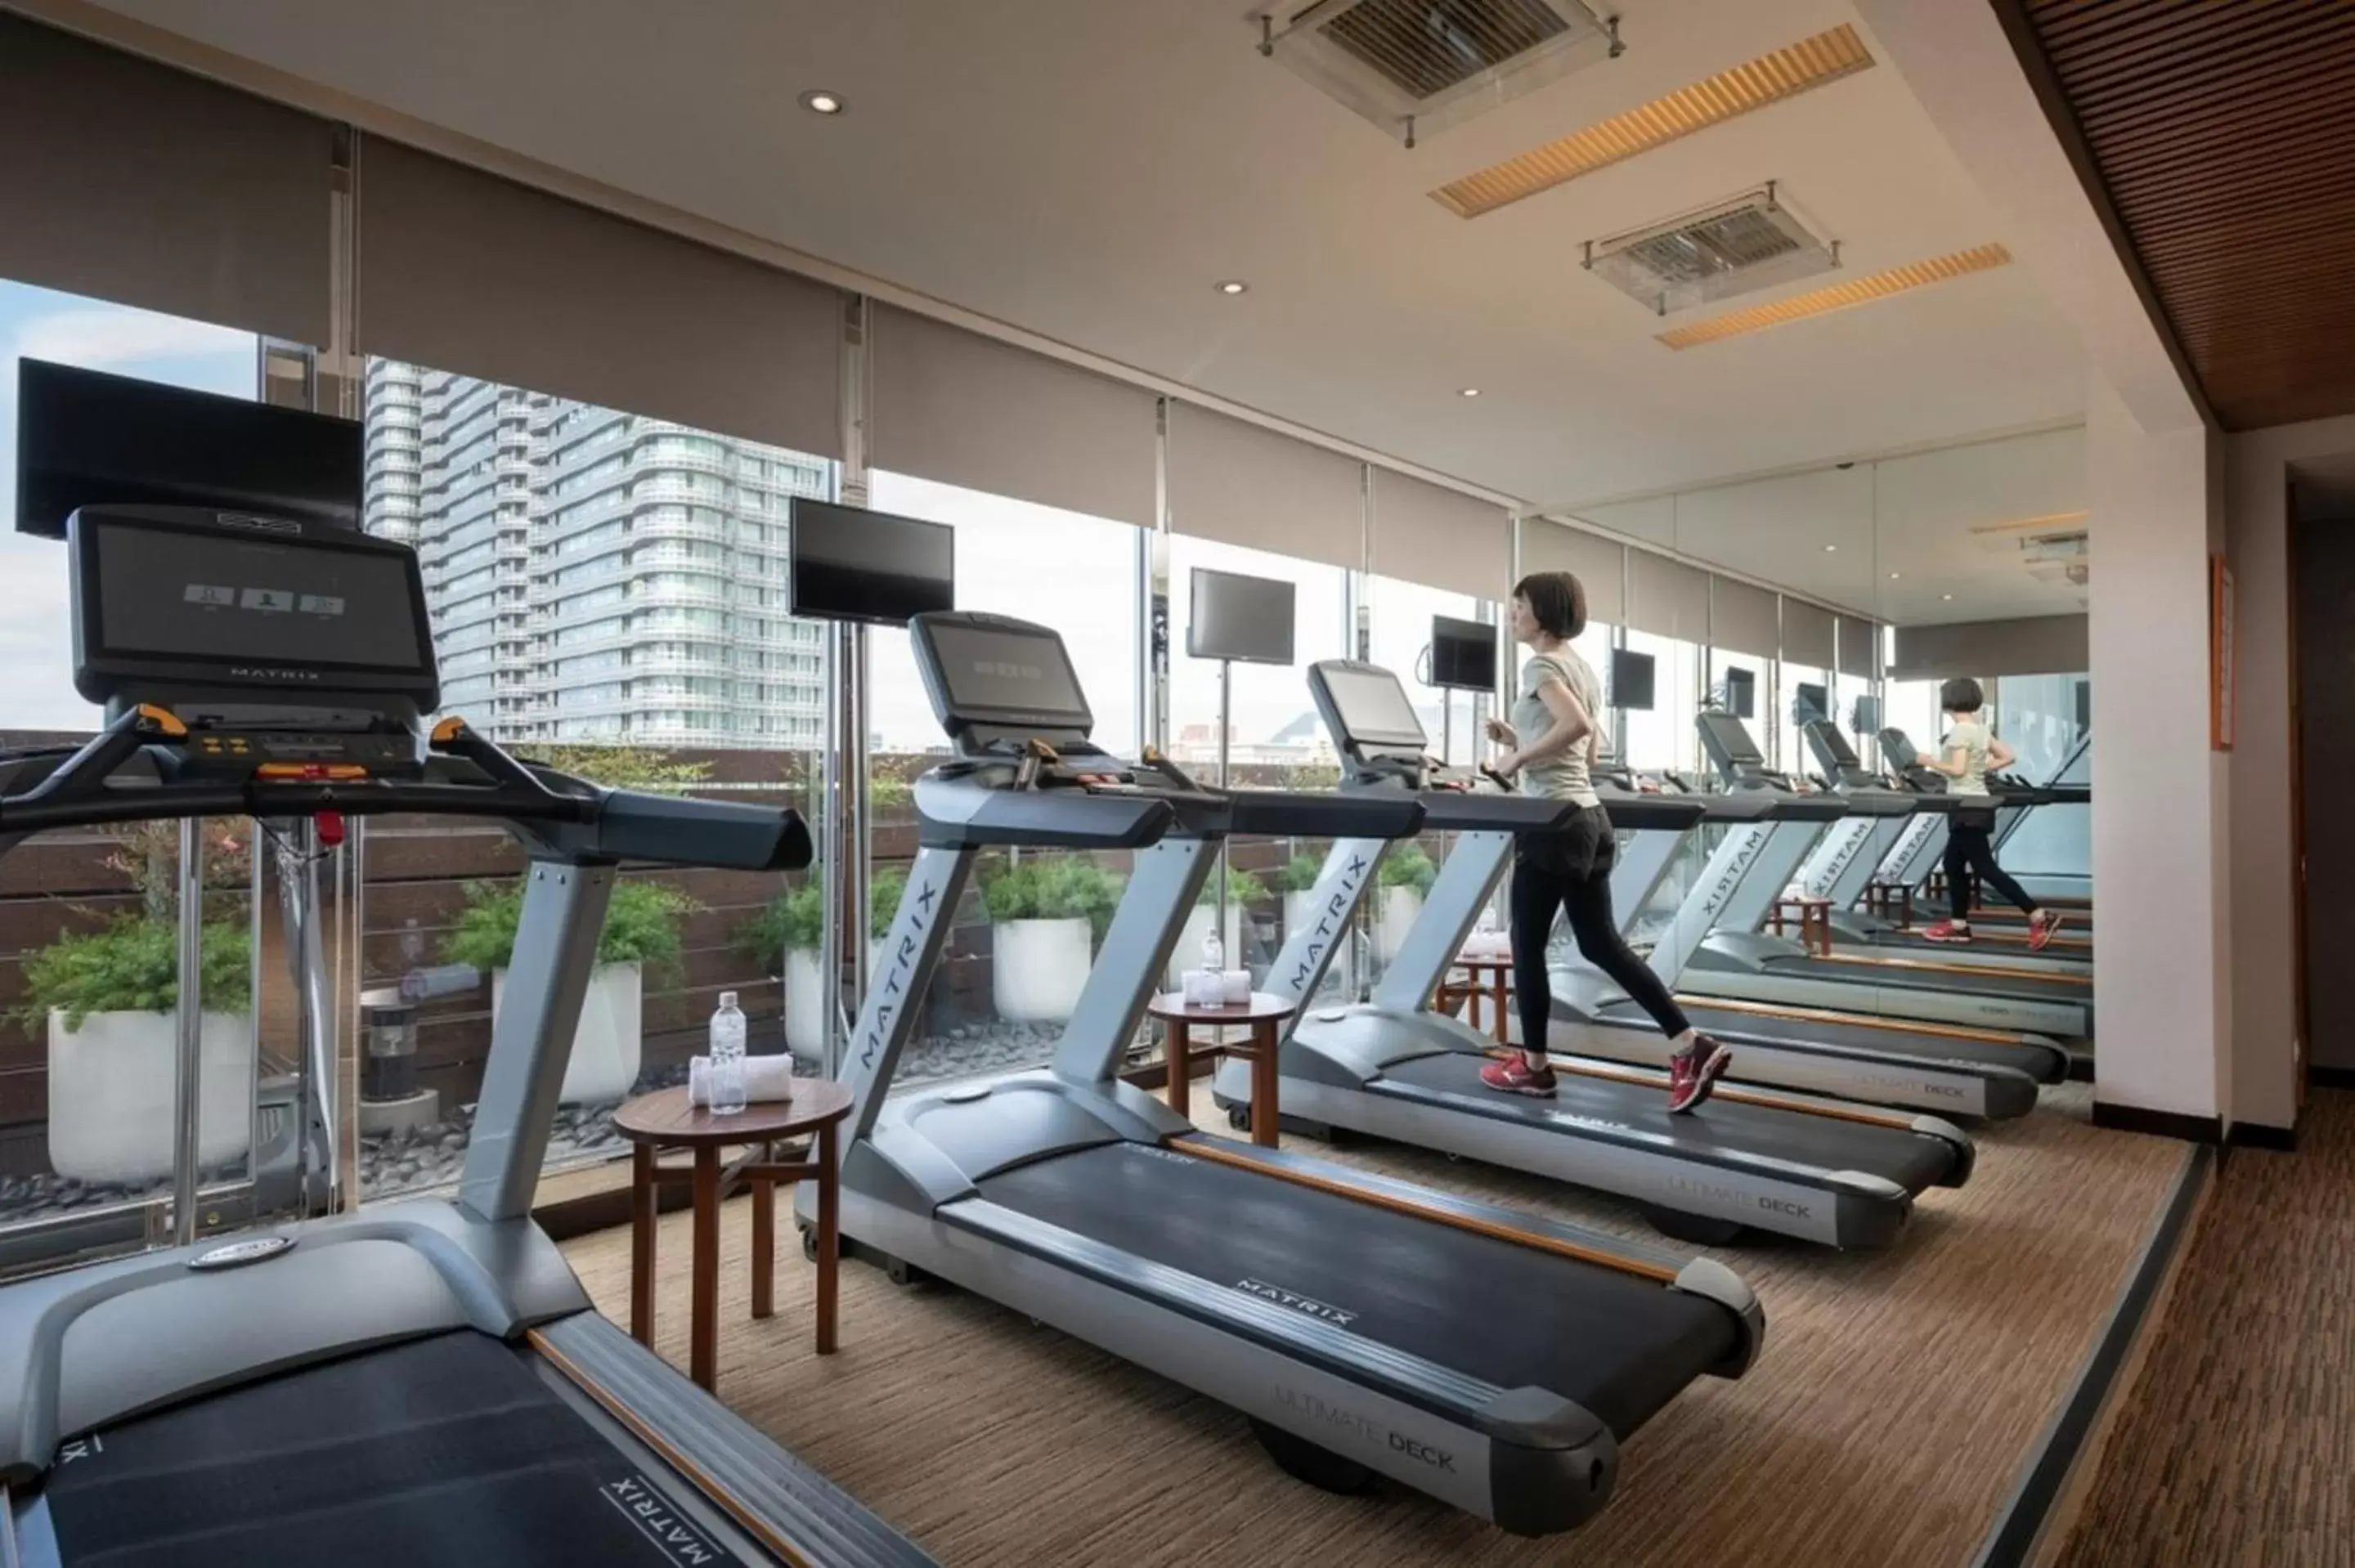 Fitness centre/facilities, Fitness Center/Facilities in Grand Hi Lai Hotel